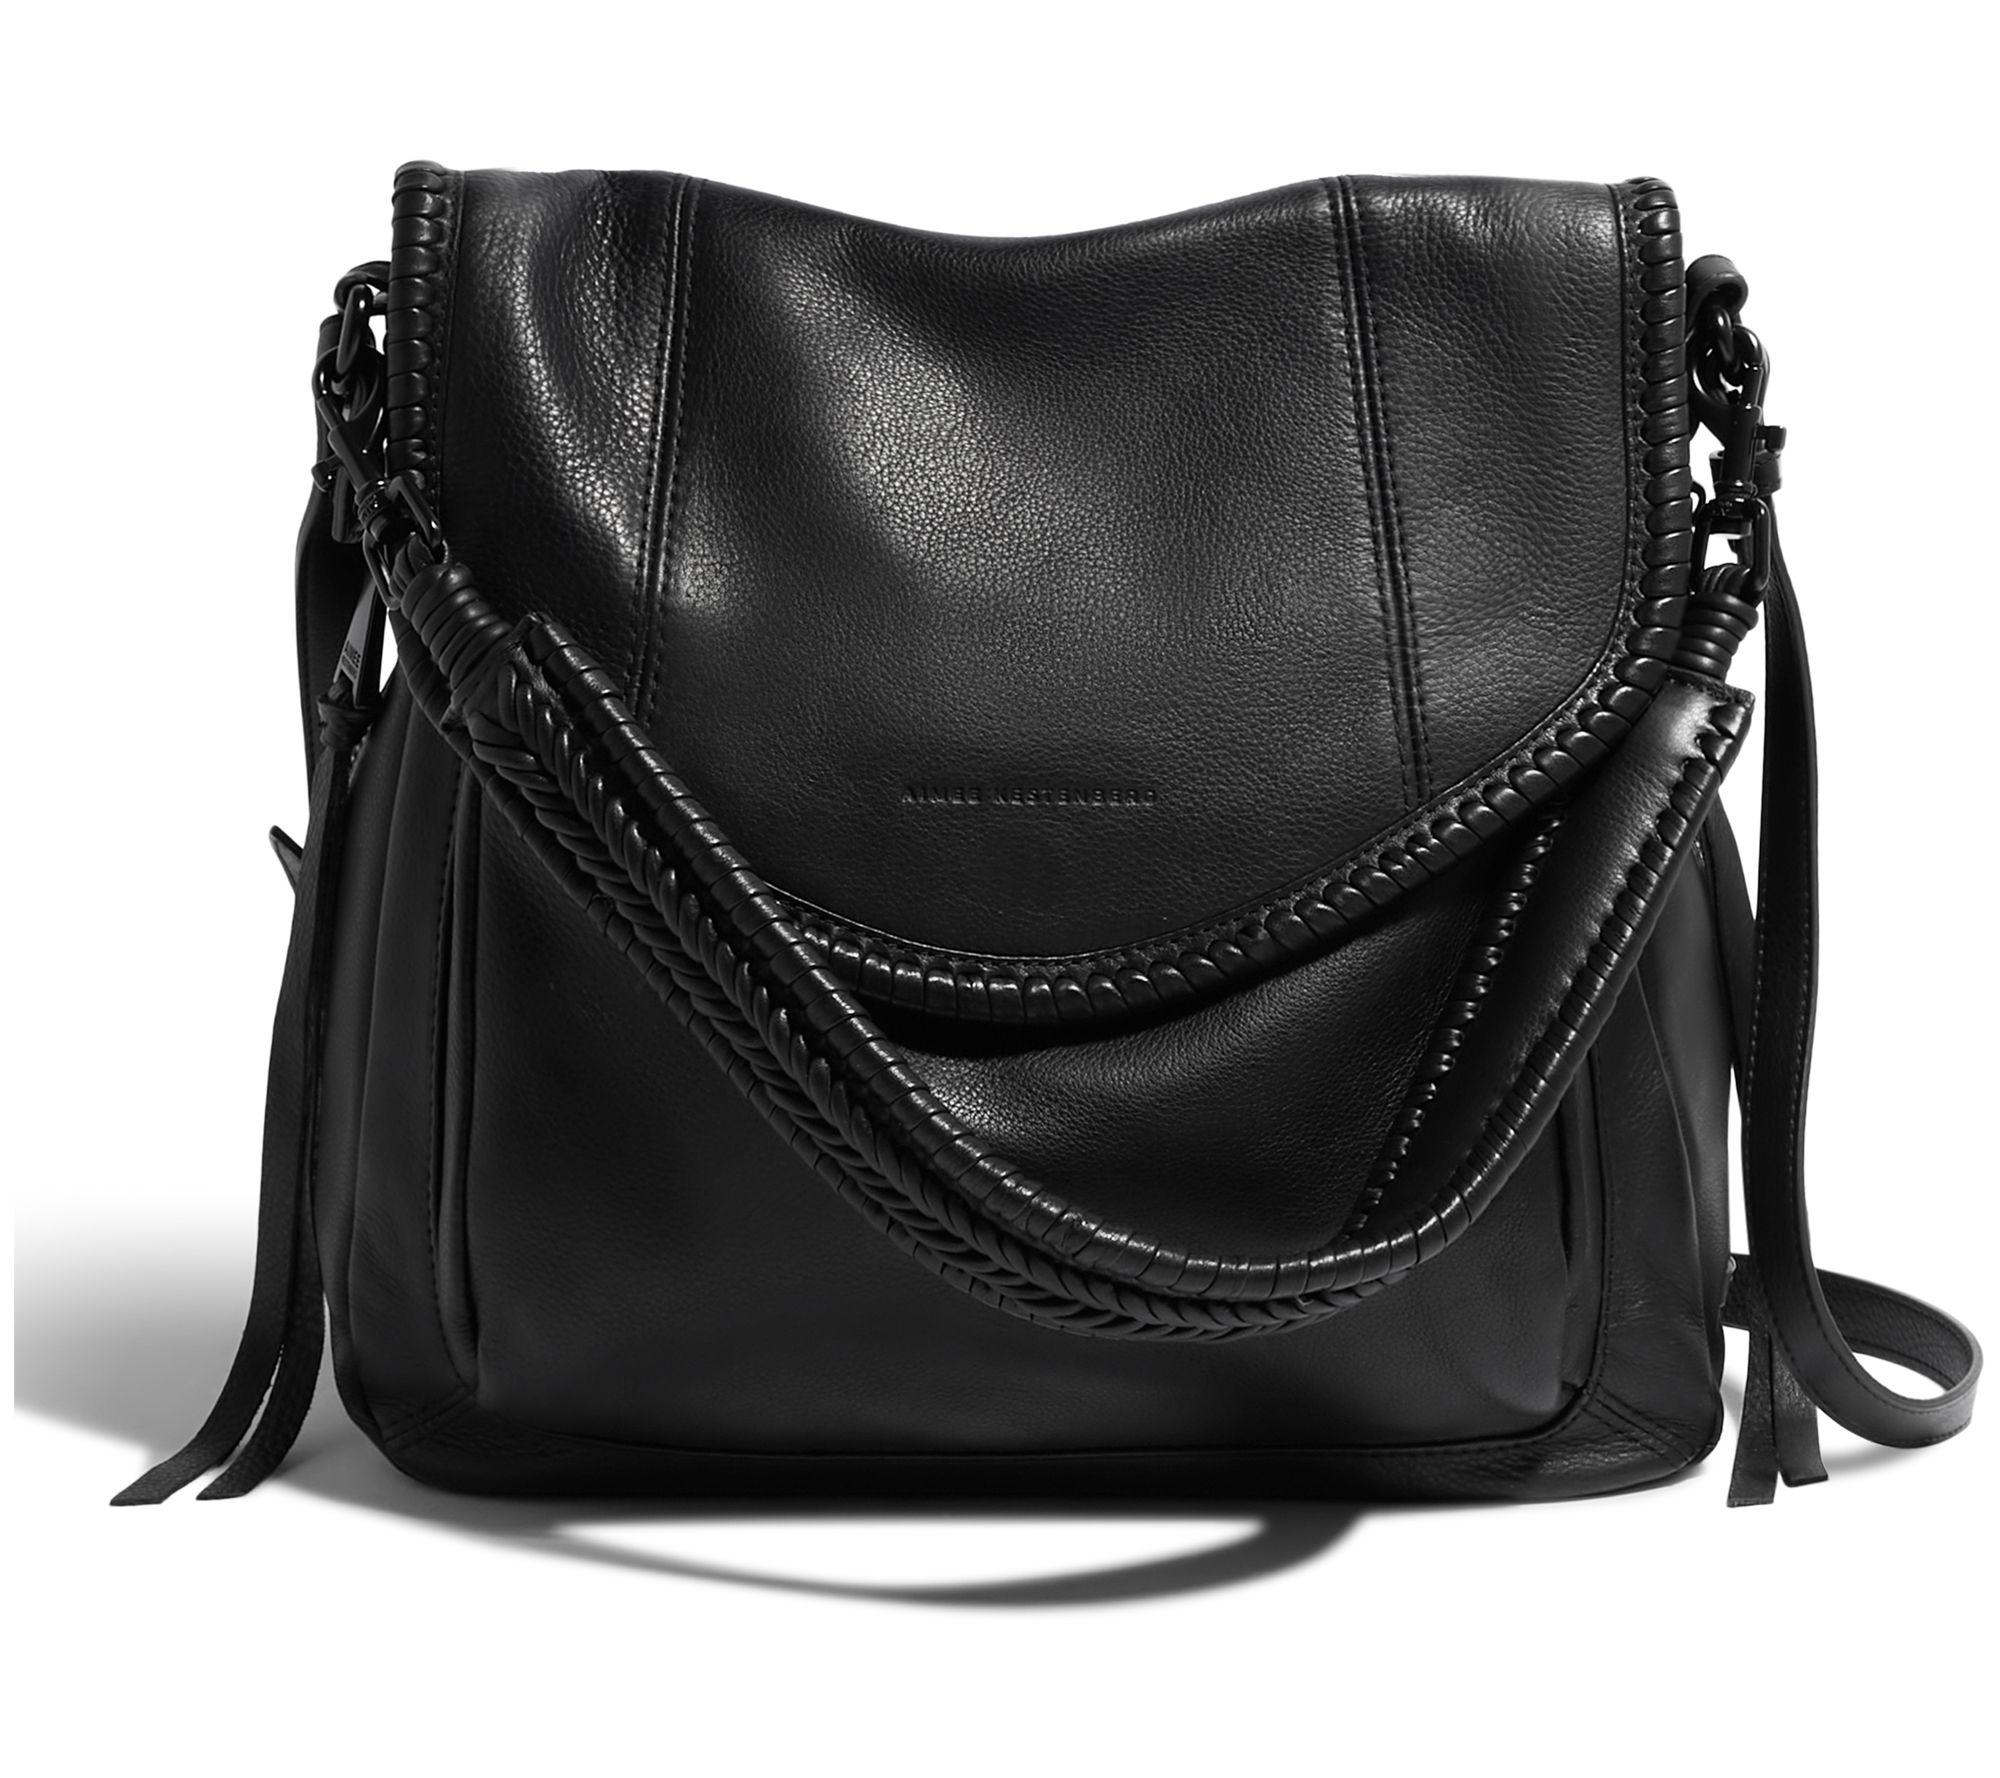 Nydj Women's Half Moon Crossbody Bag in Red, Regular, Size: 2x | Leather